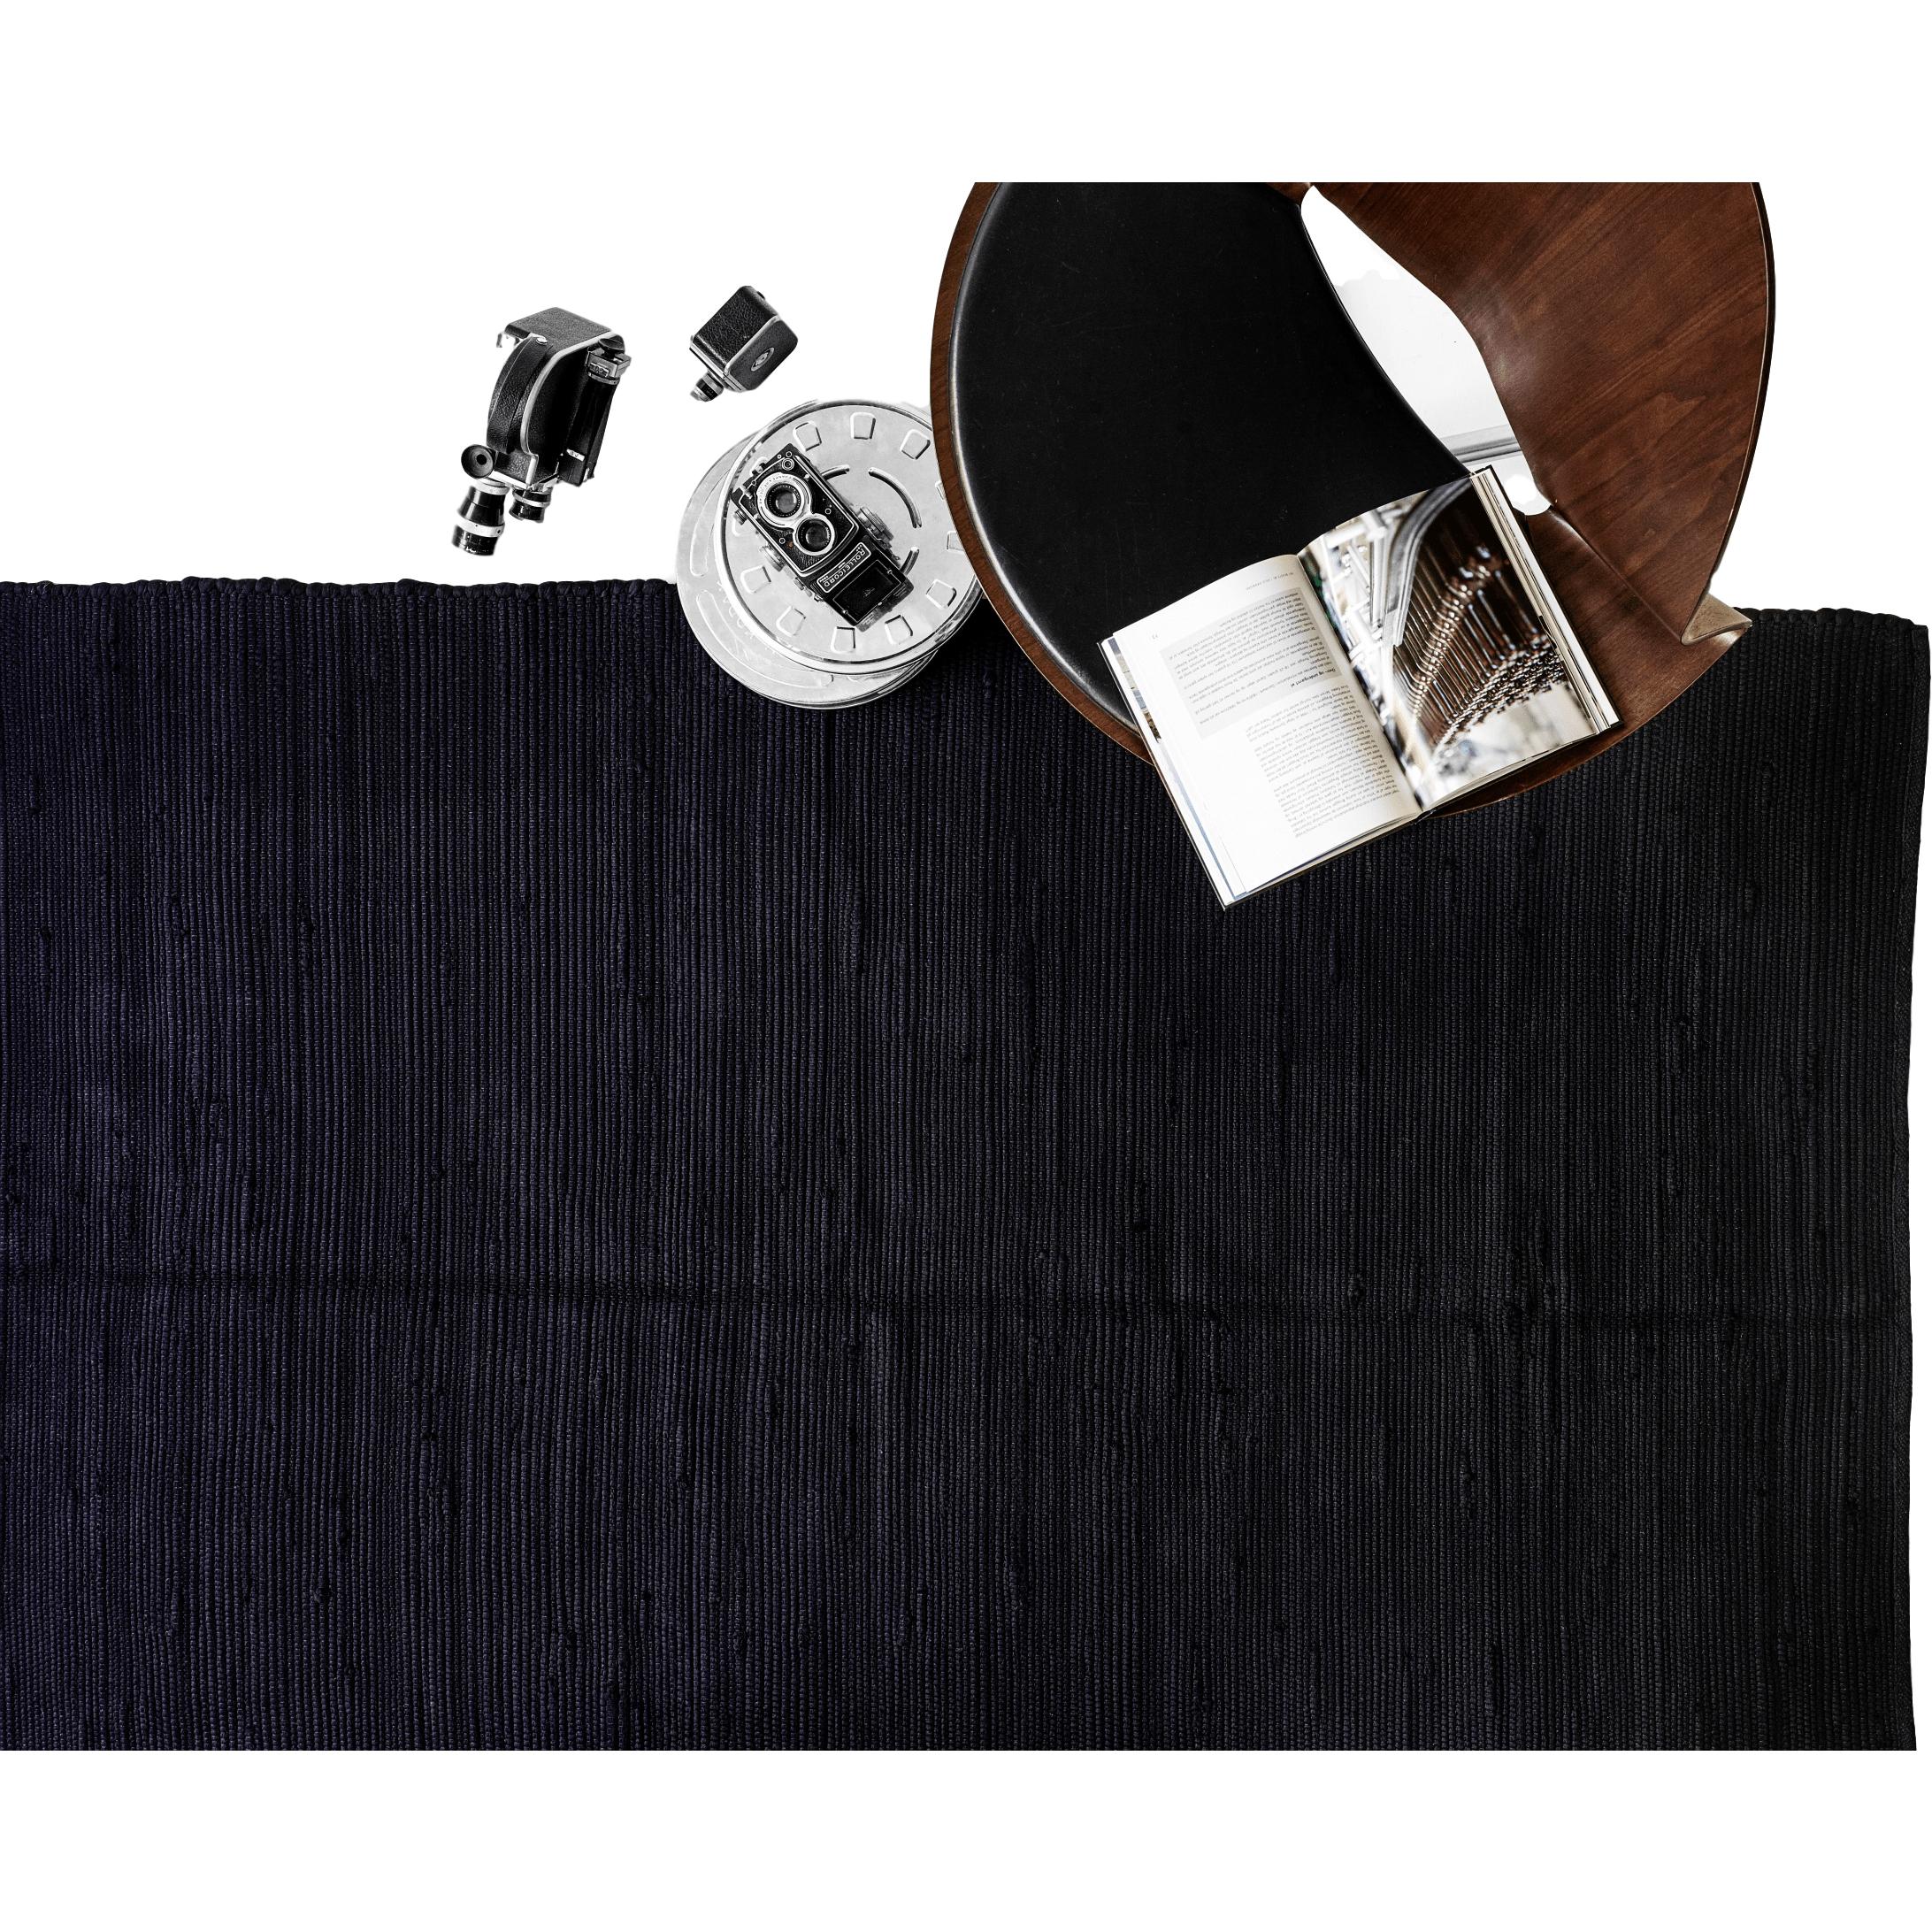 Rug Solid Bomullsfilt svart, 170 x 240 cm